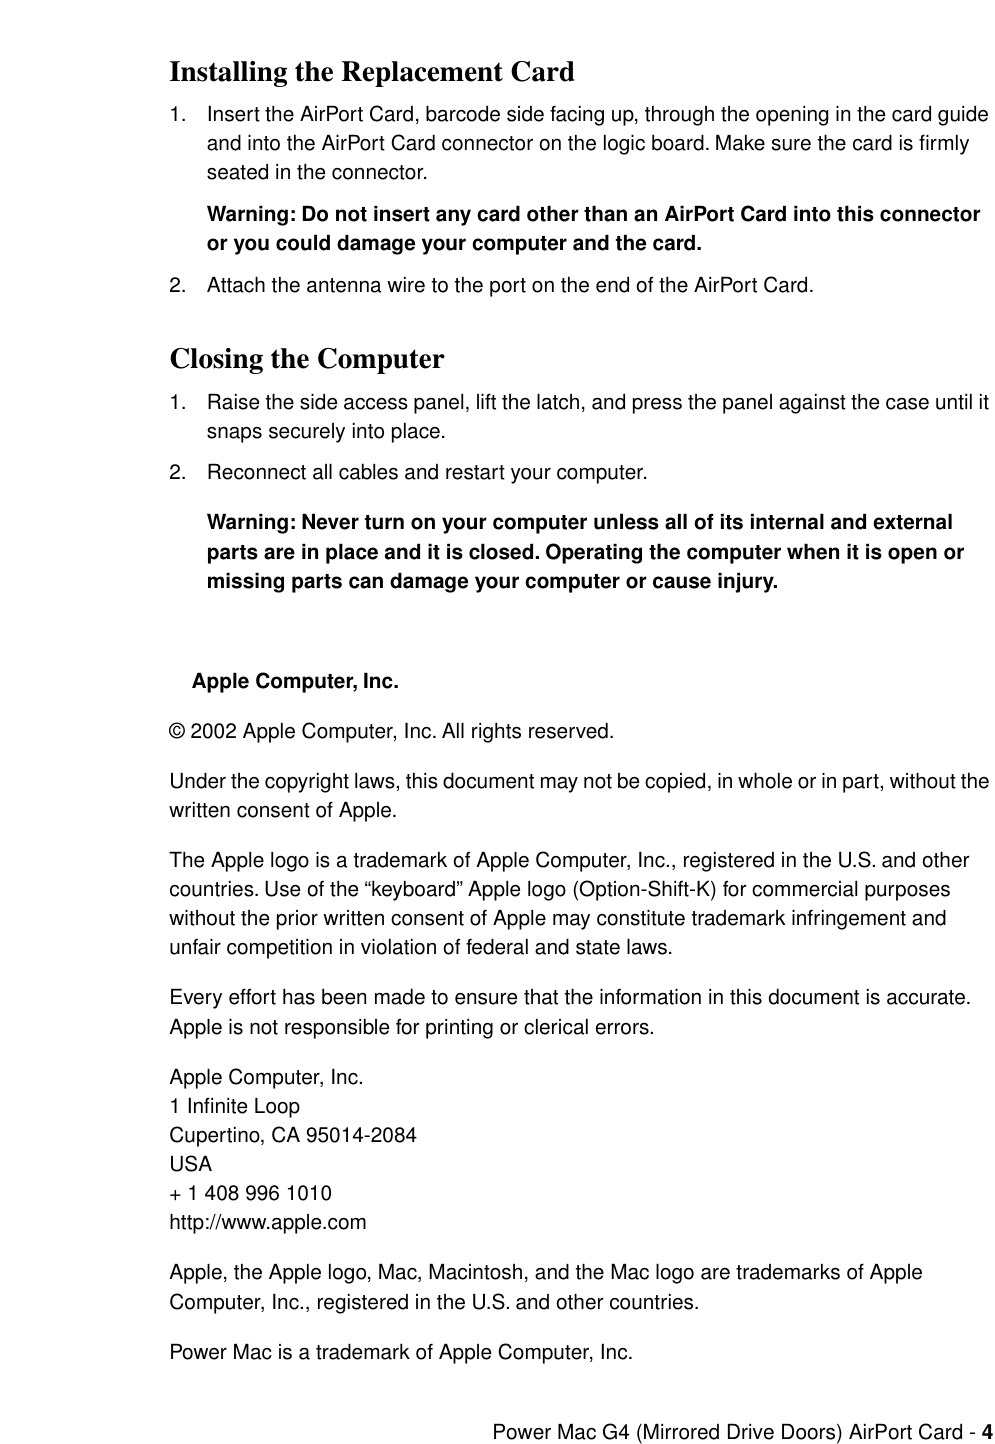 Manual For Apple Power Mac G4